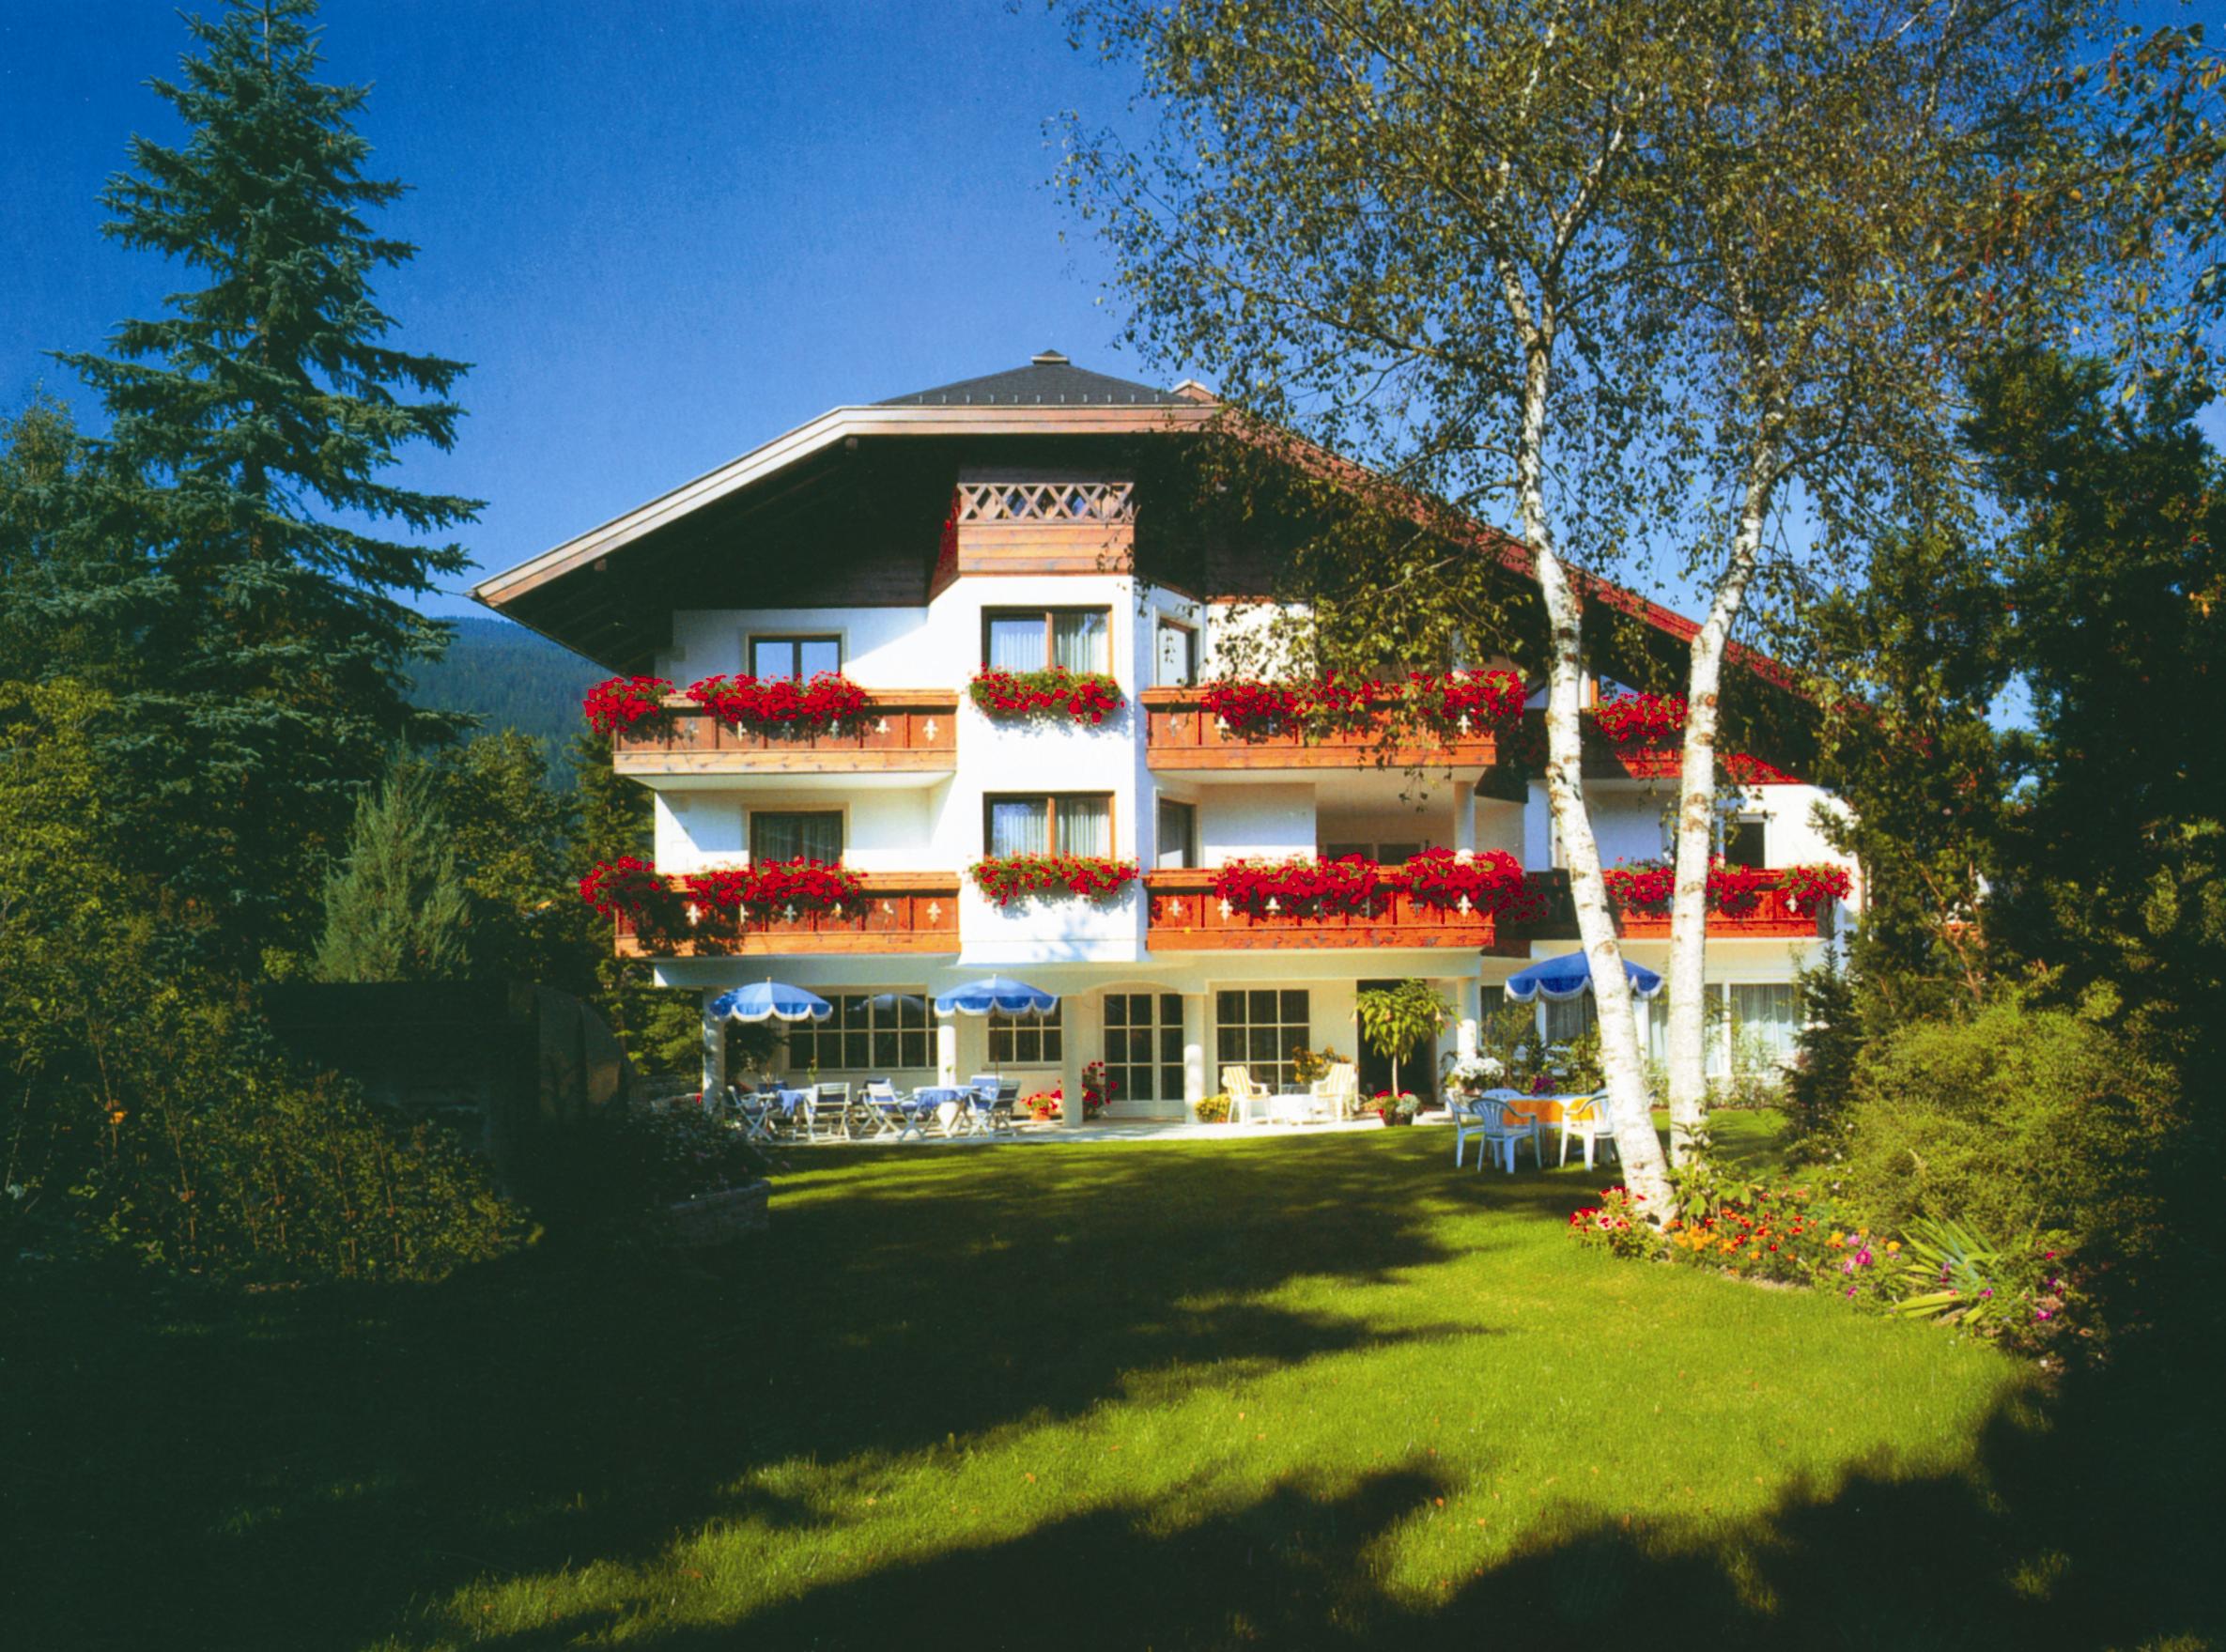 Hotel Barbarahof